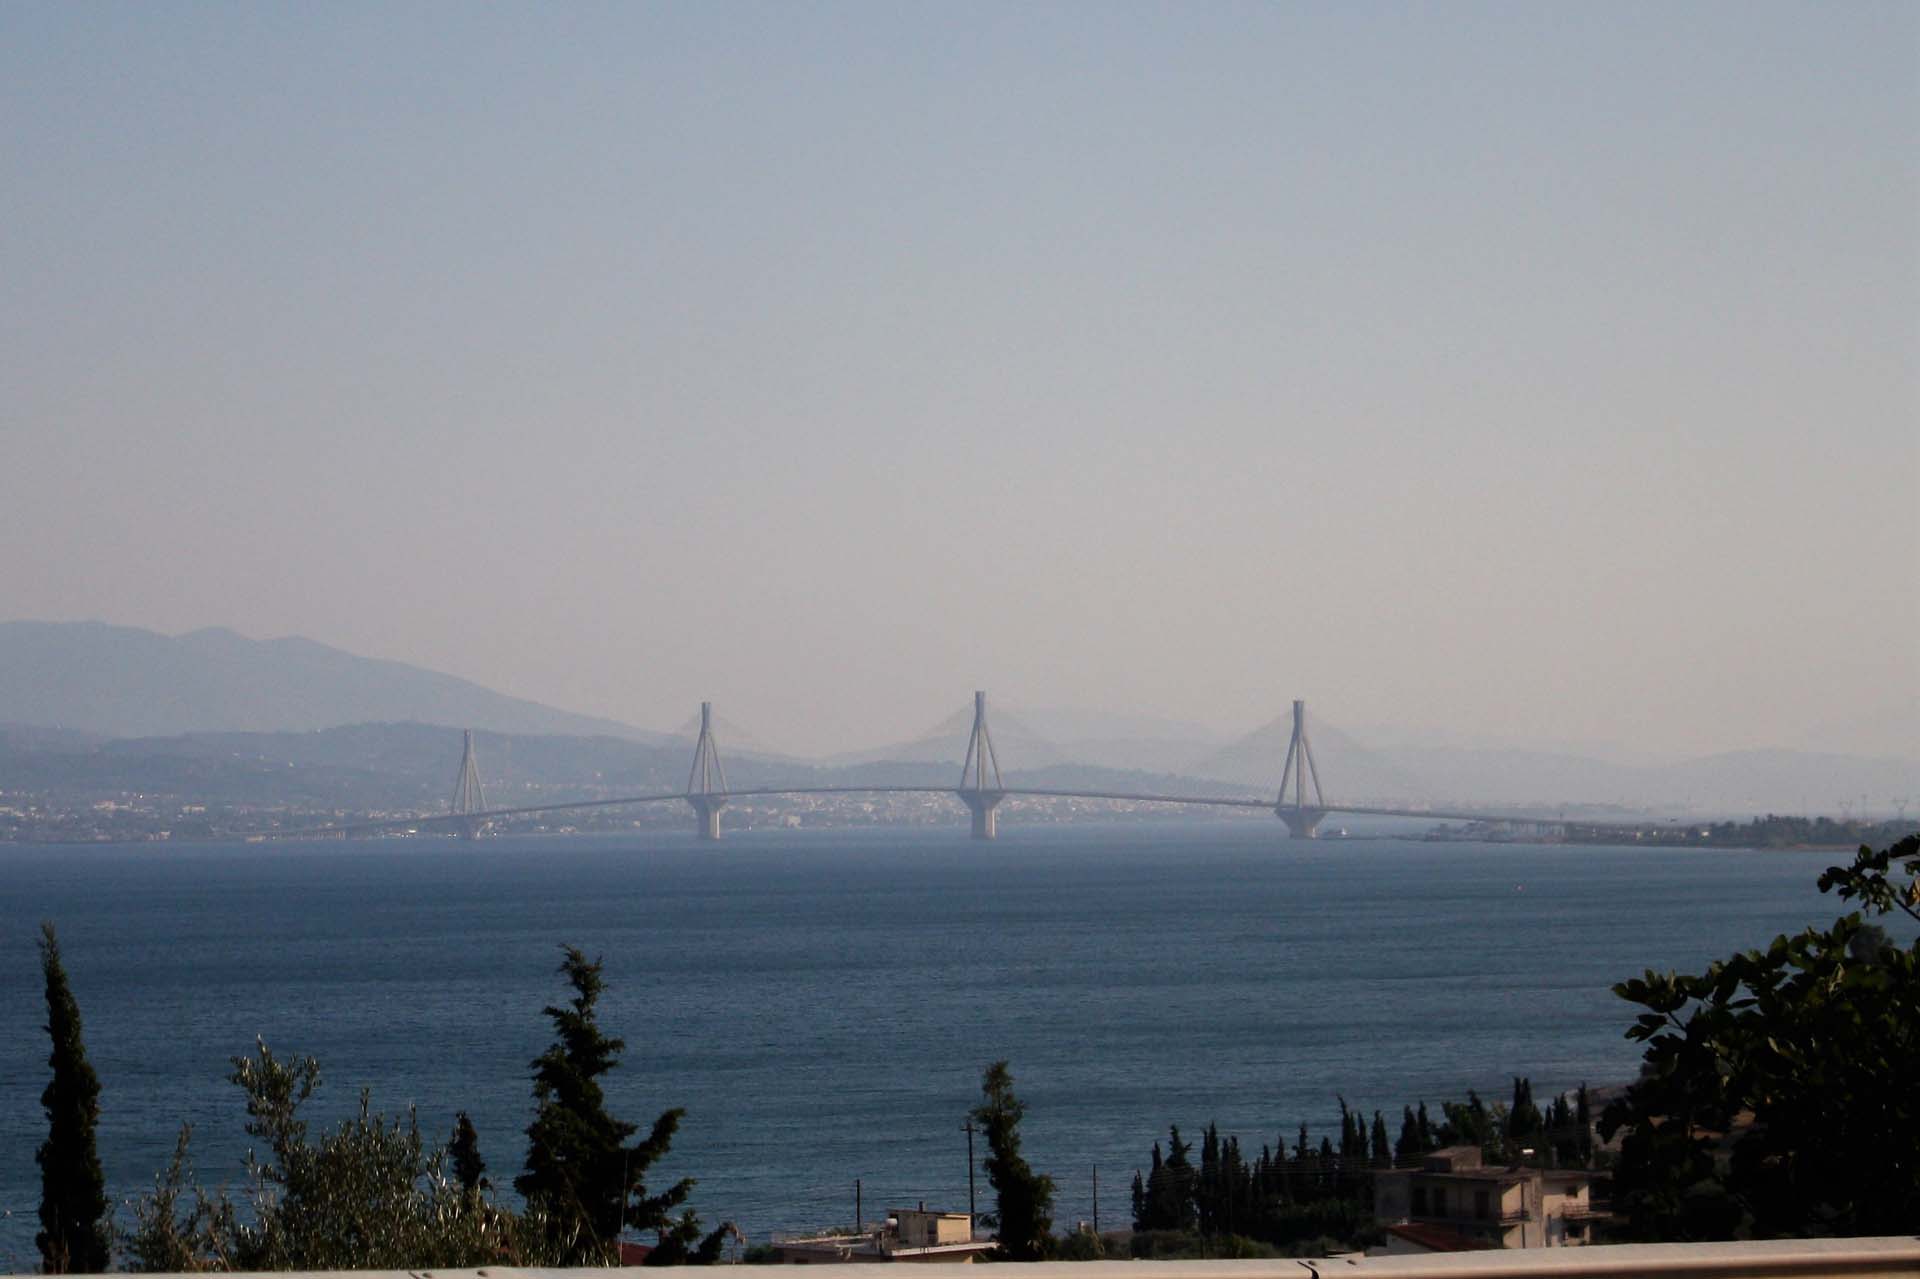 Rio Antirrio bridge between mainland greece and peloponnese